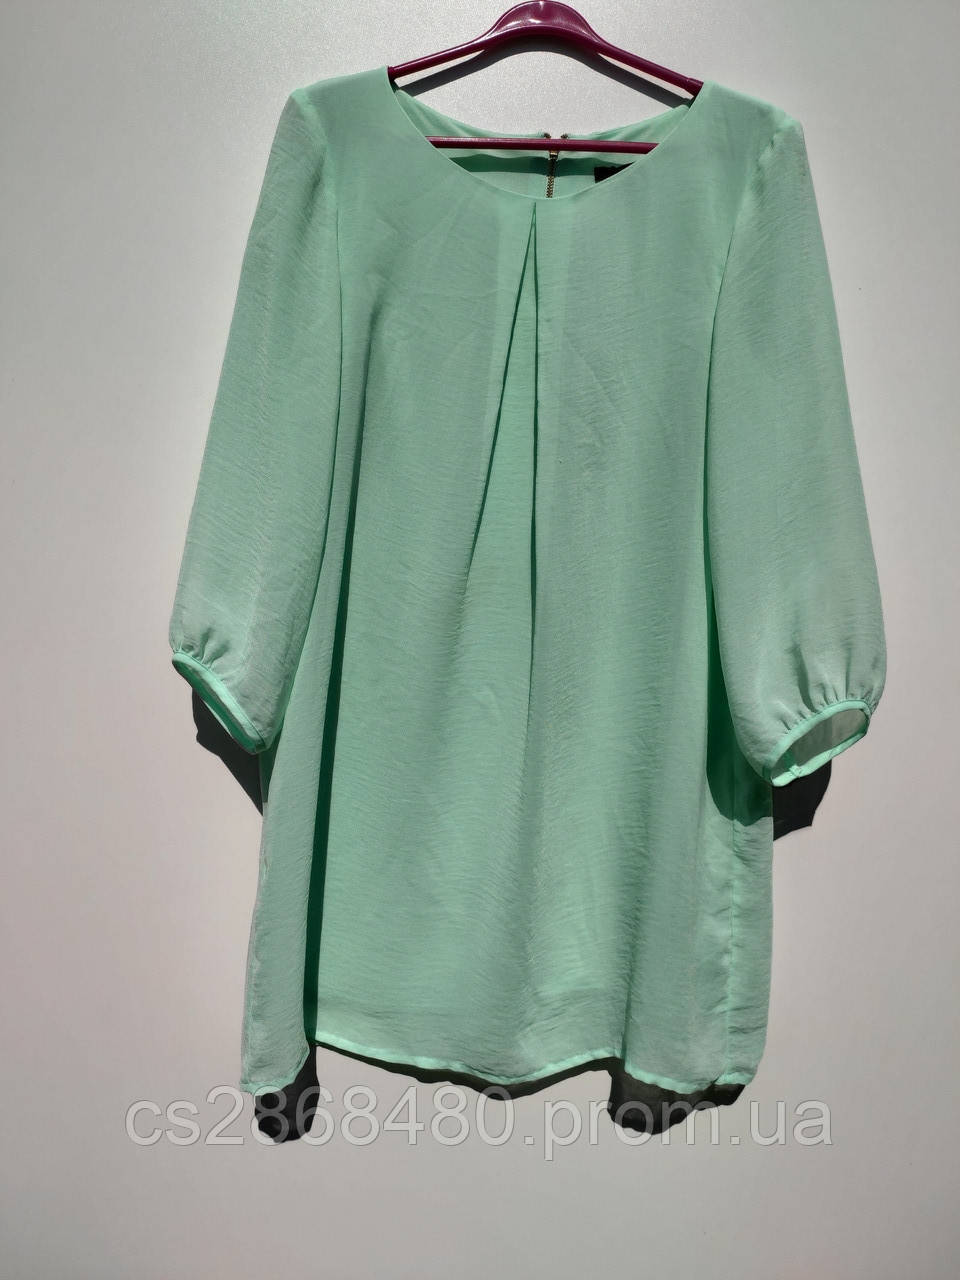 Шифонова блуза  туніка HsM Розмір 42 (Б-138) блуза / туника